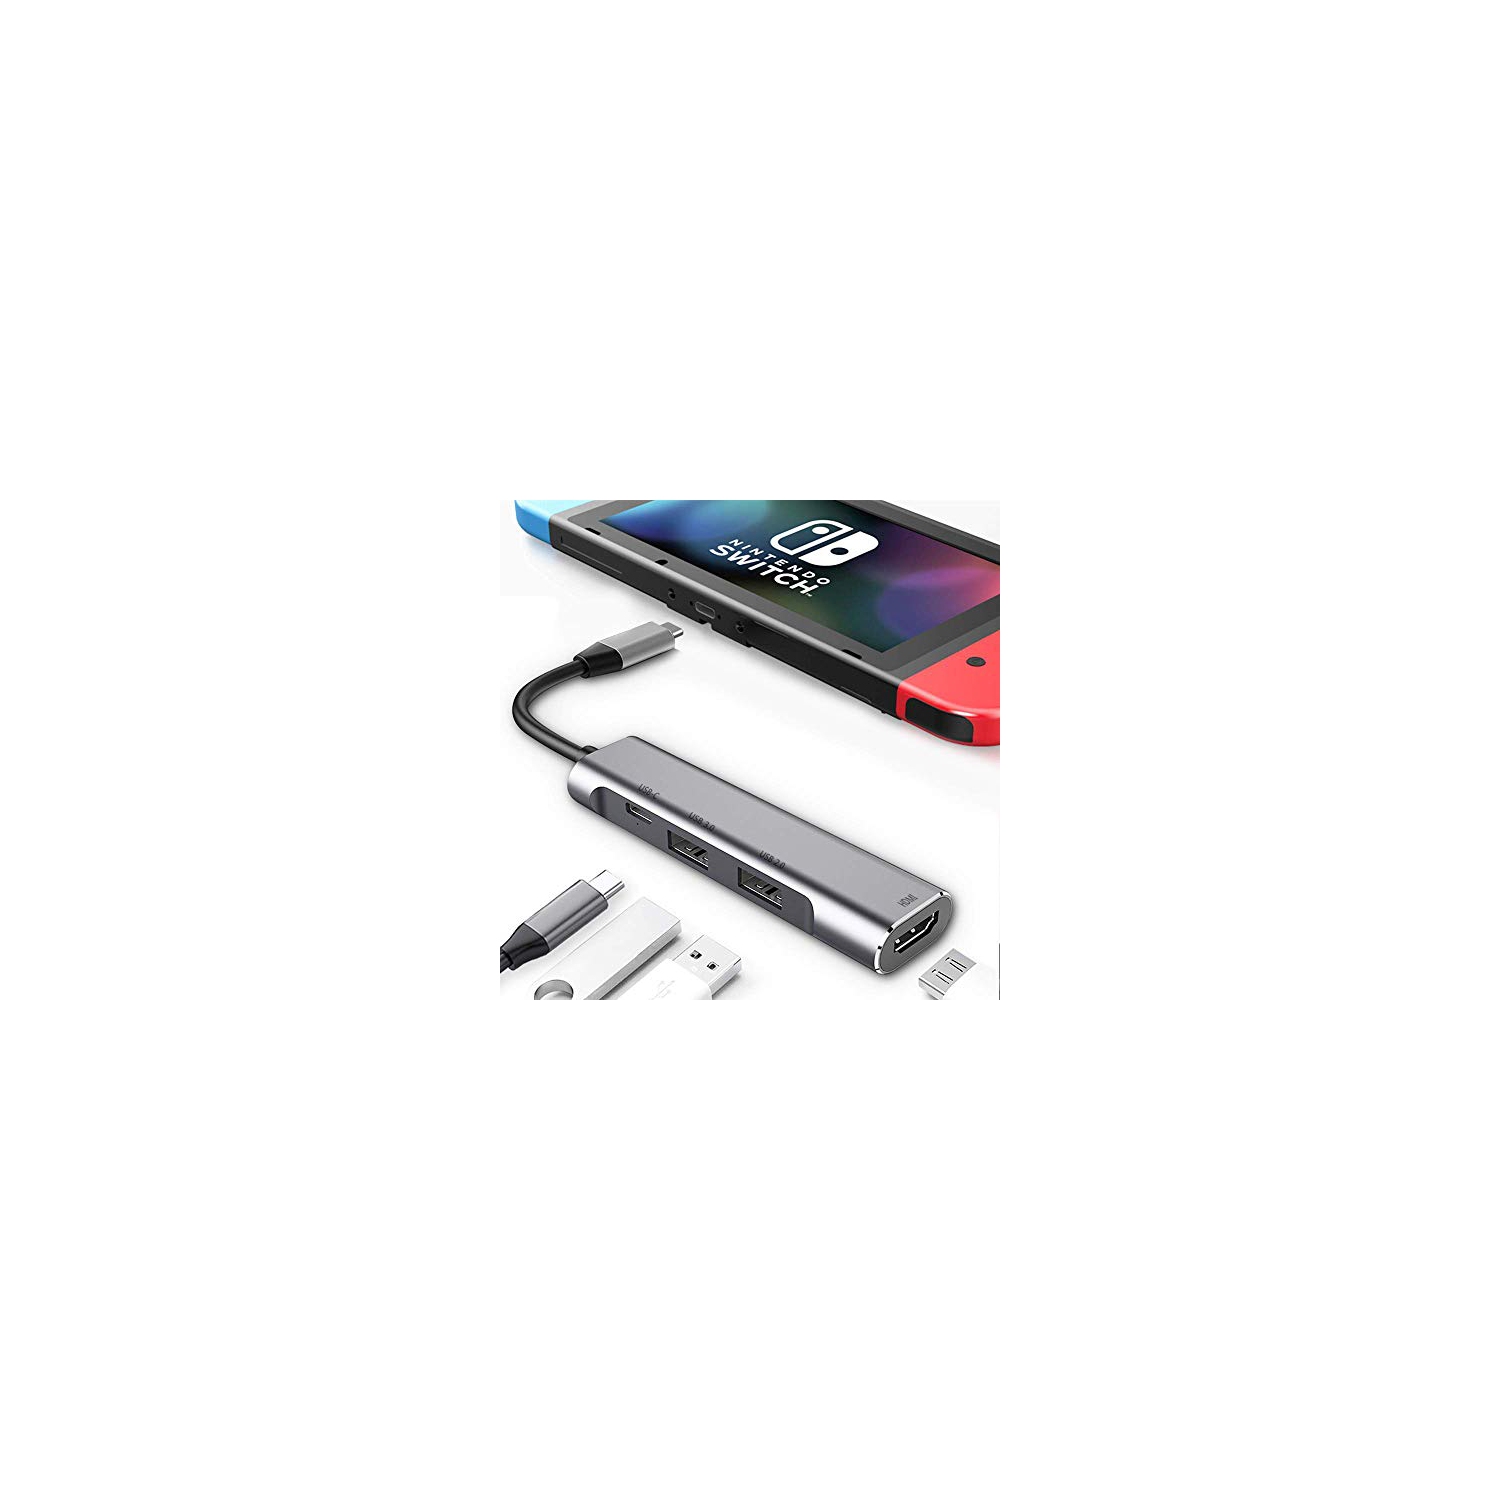 RREAKA USB Type C to HDMI Digital AV Multiport Hub, USB-C (USB3.1) Adapter PD Charger for Nintendo Switch,Portable 4K ...